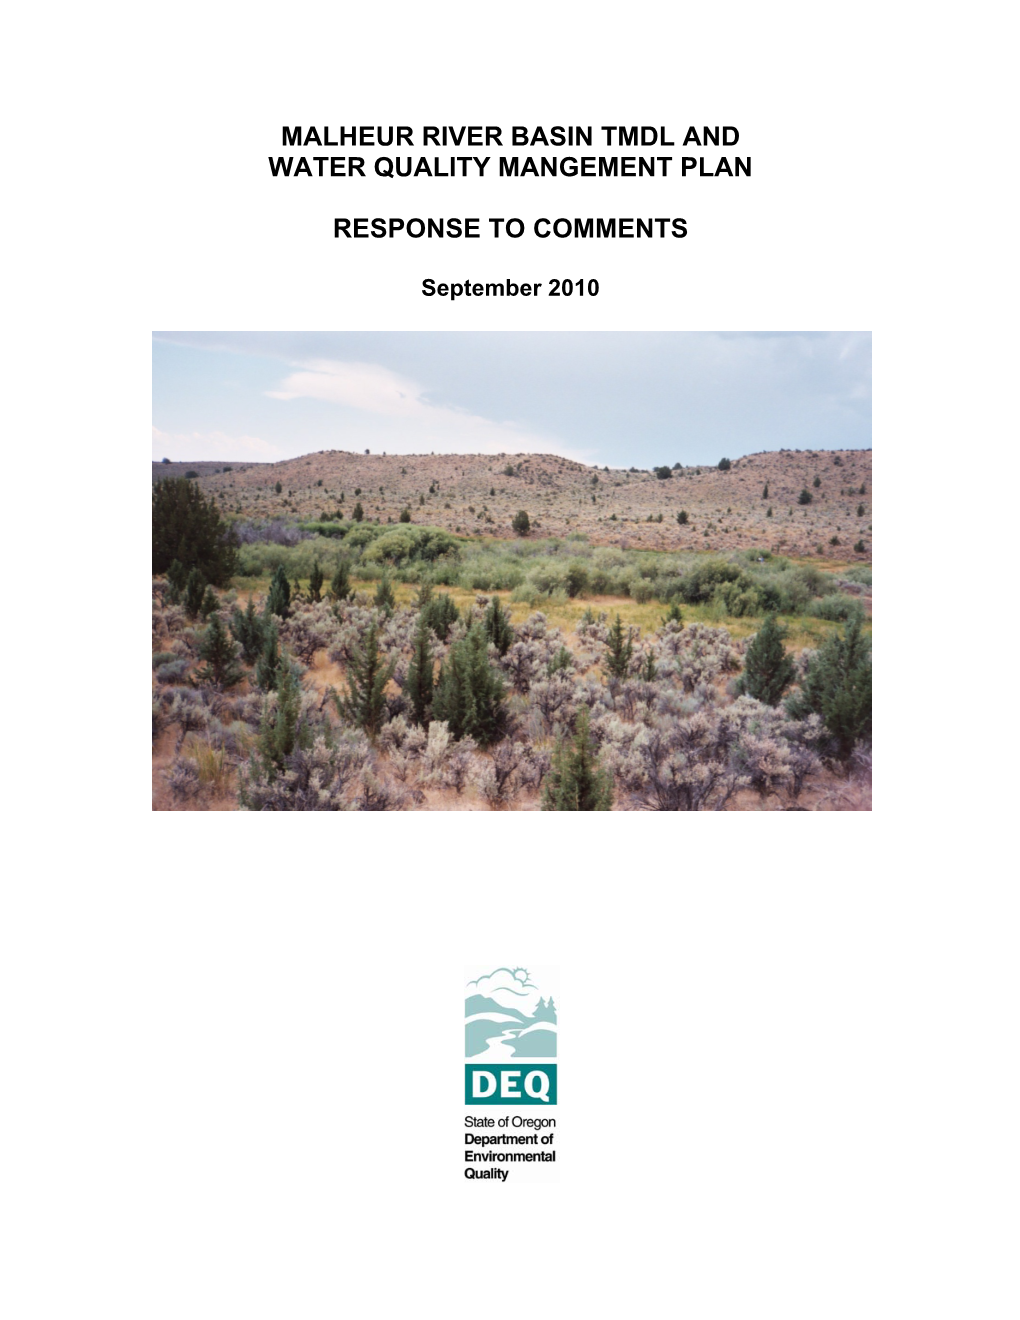 Malheur River Basin TMDL Response to Public Comments